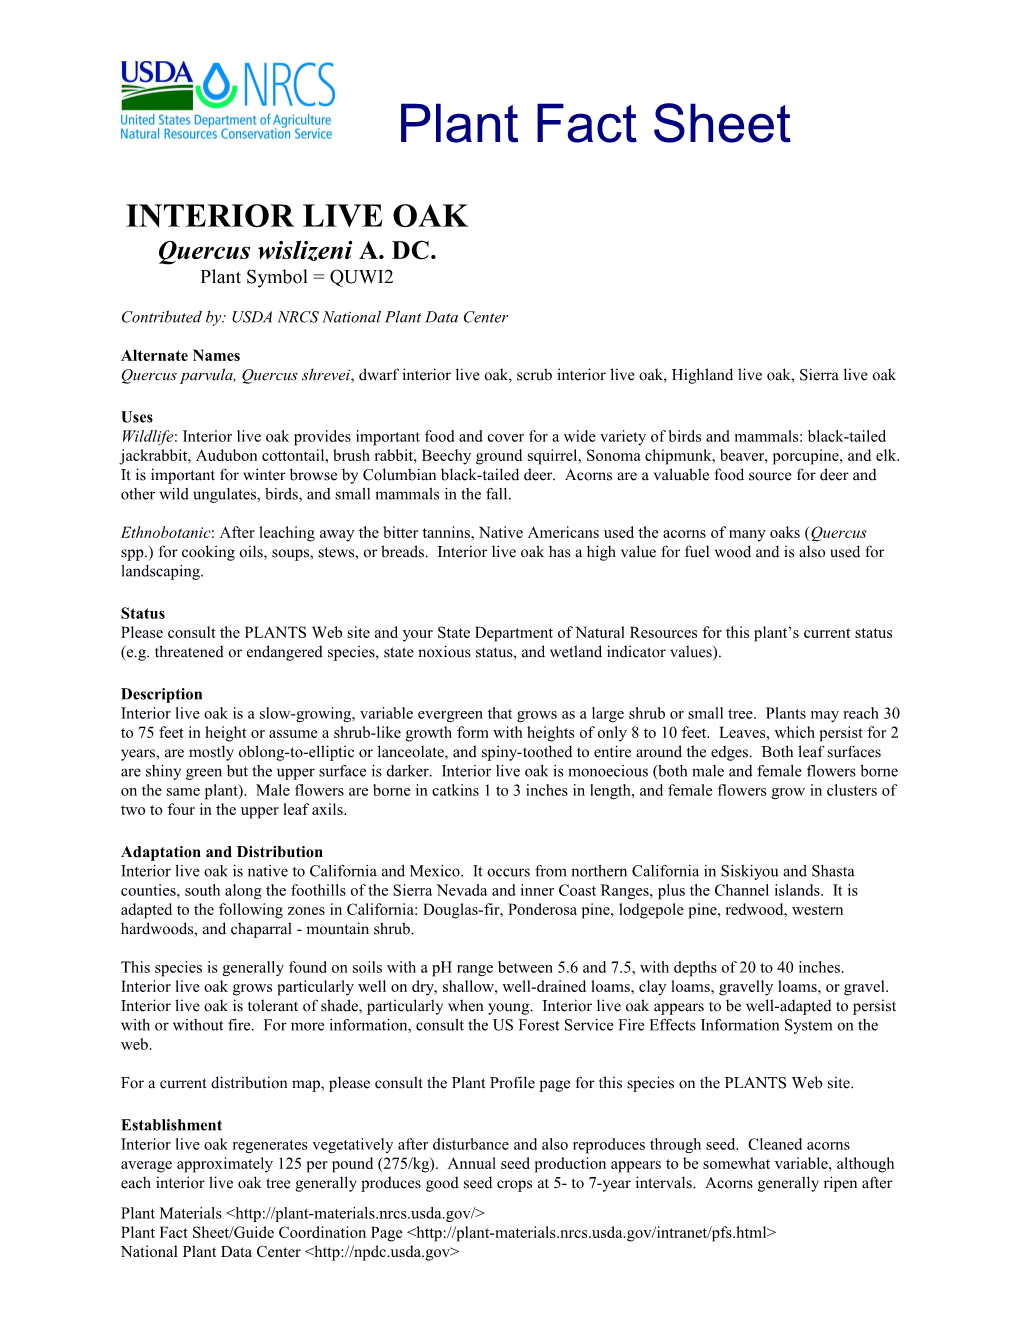 Interior Live Oak